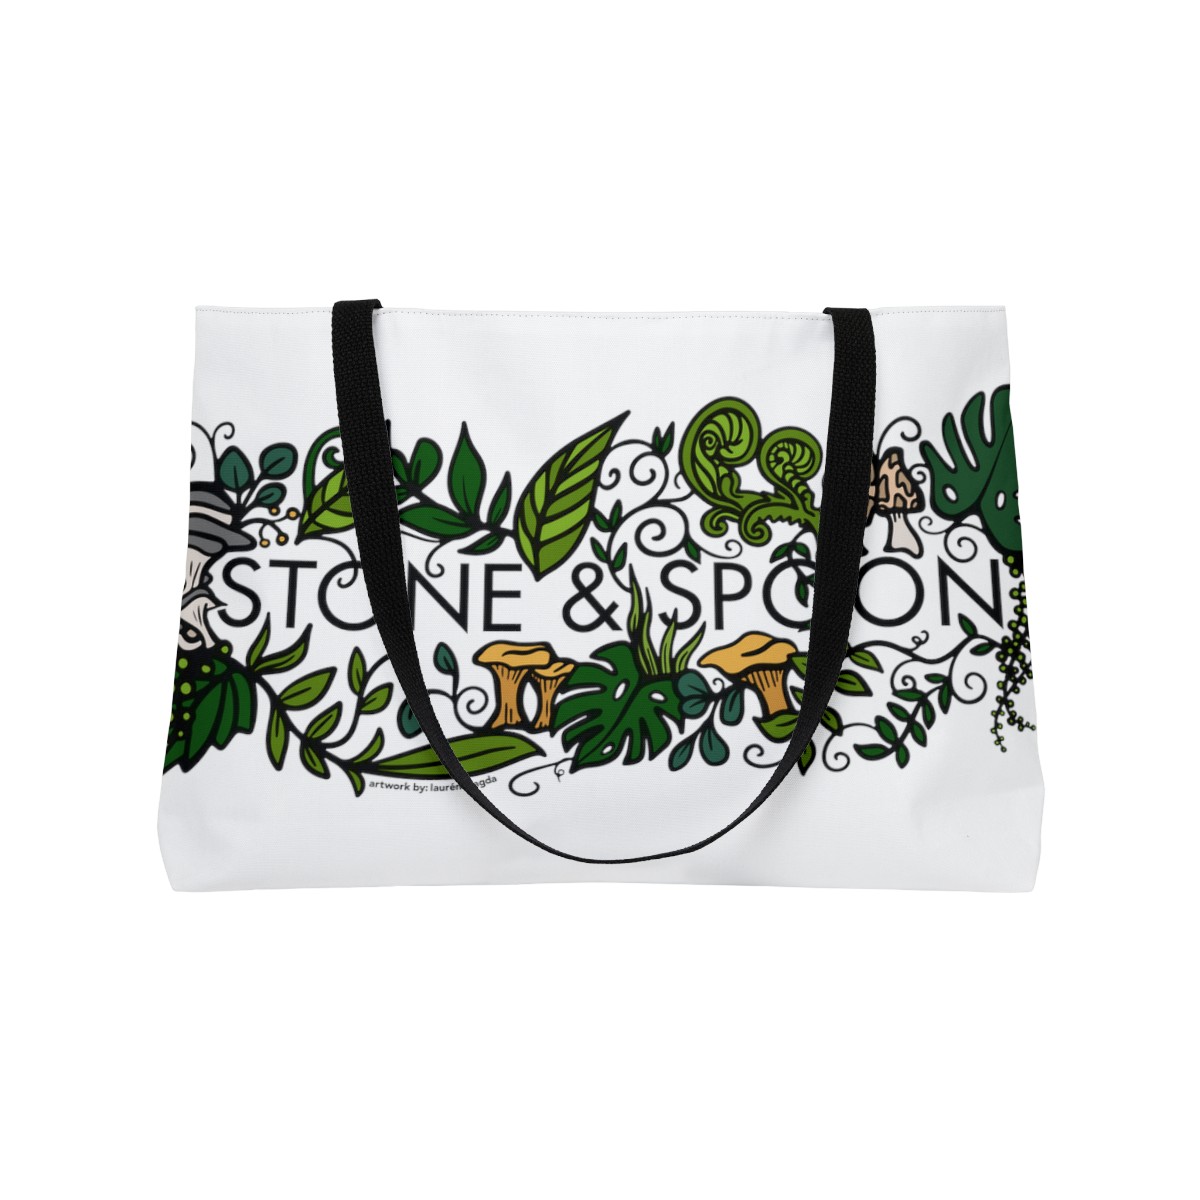 Stone & Spoon Weekender Tote Bag product thumbnail image